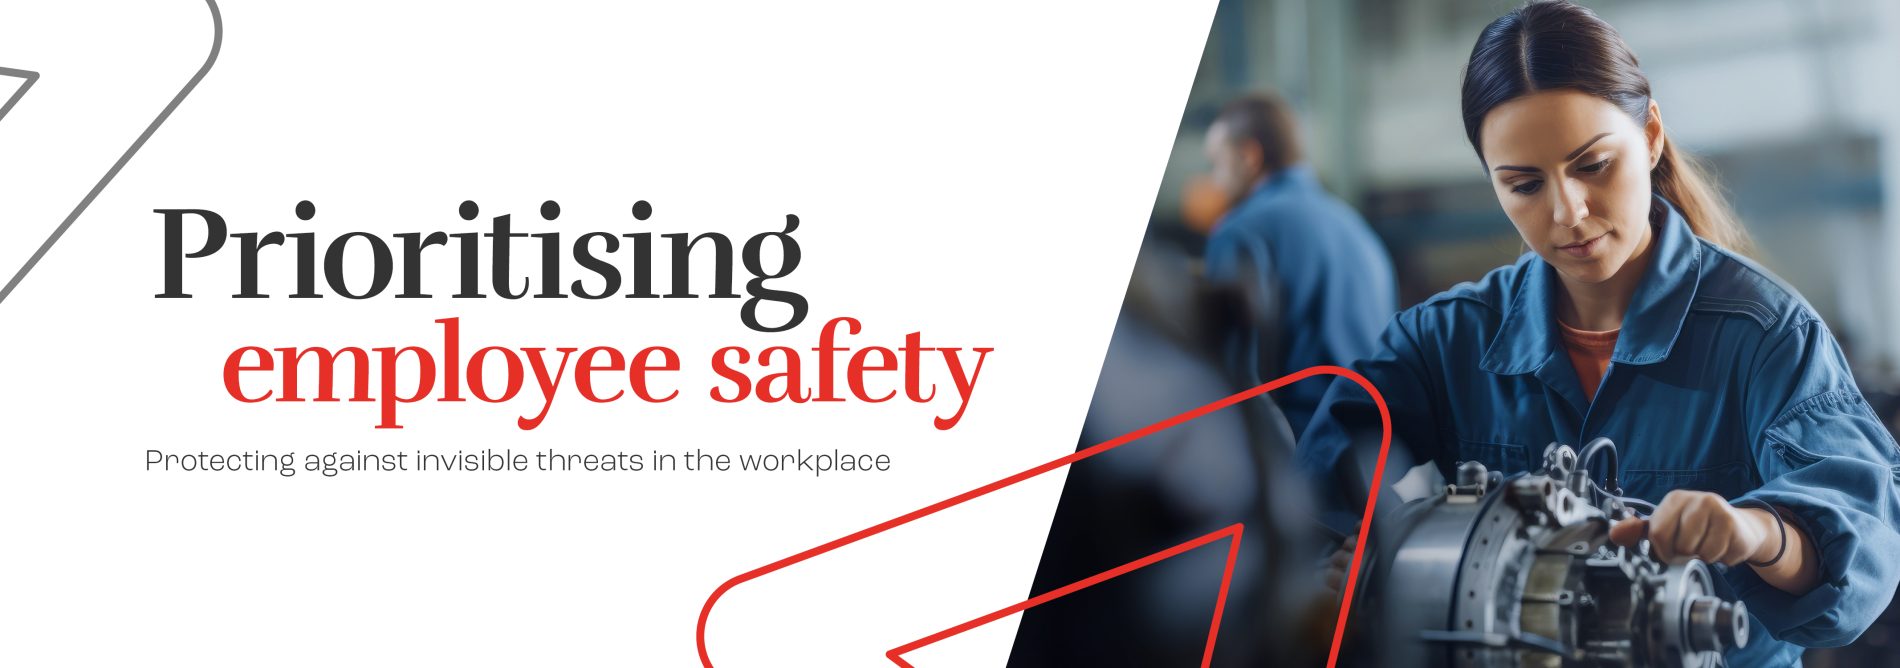 Prioritising employee safety